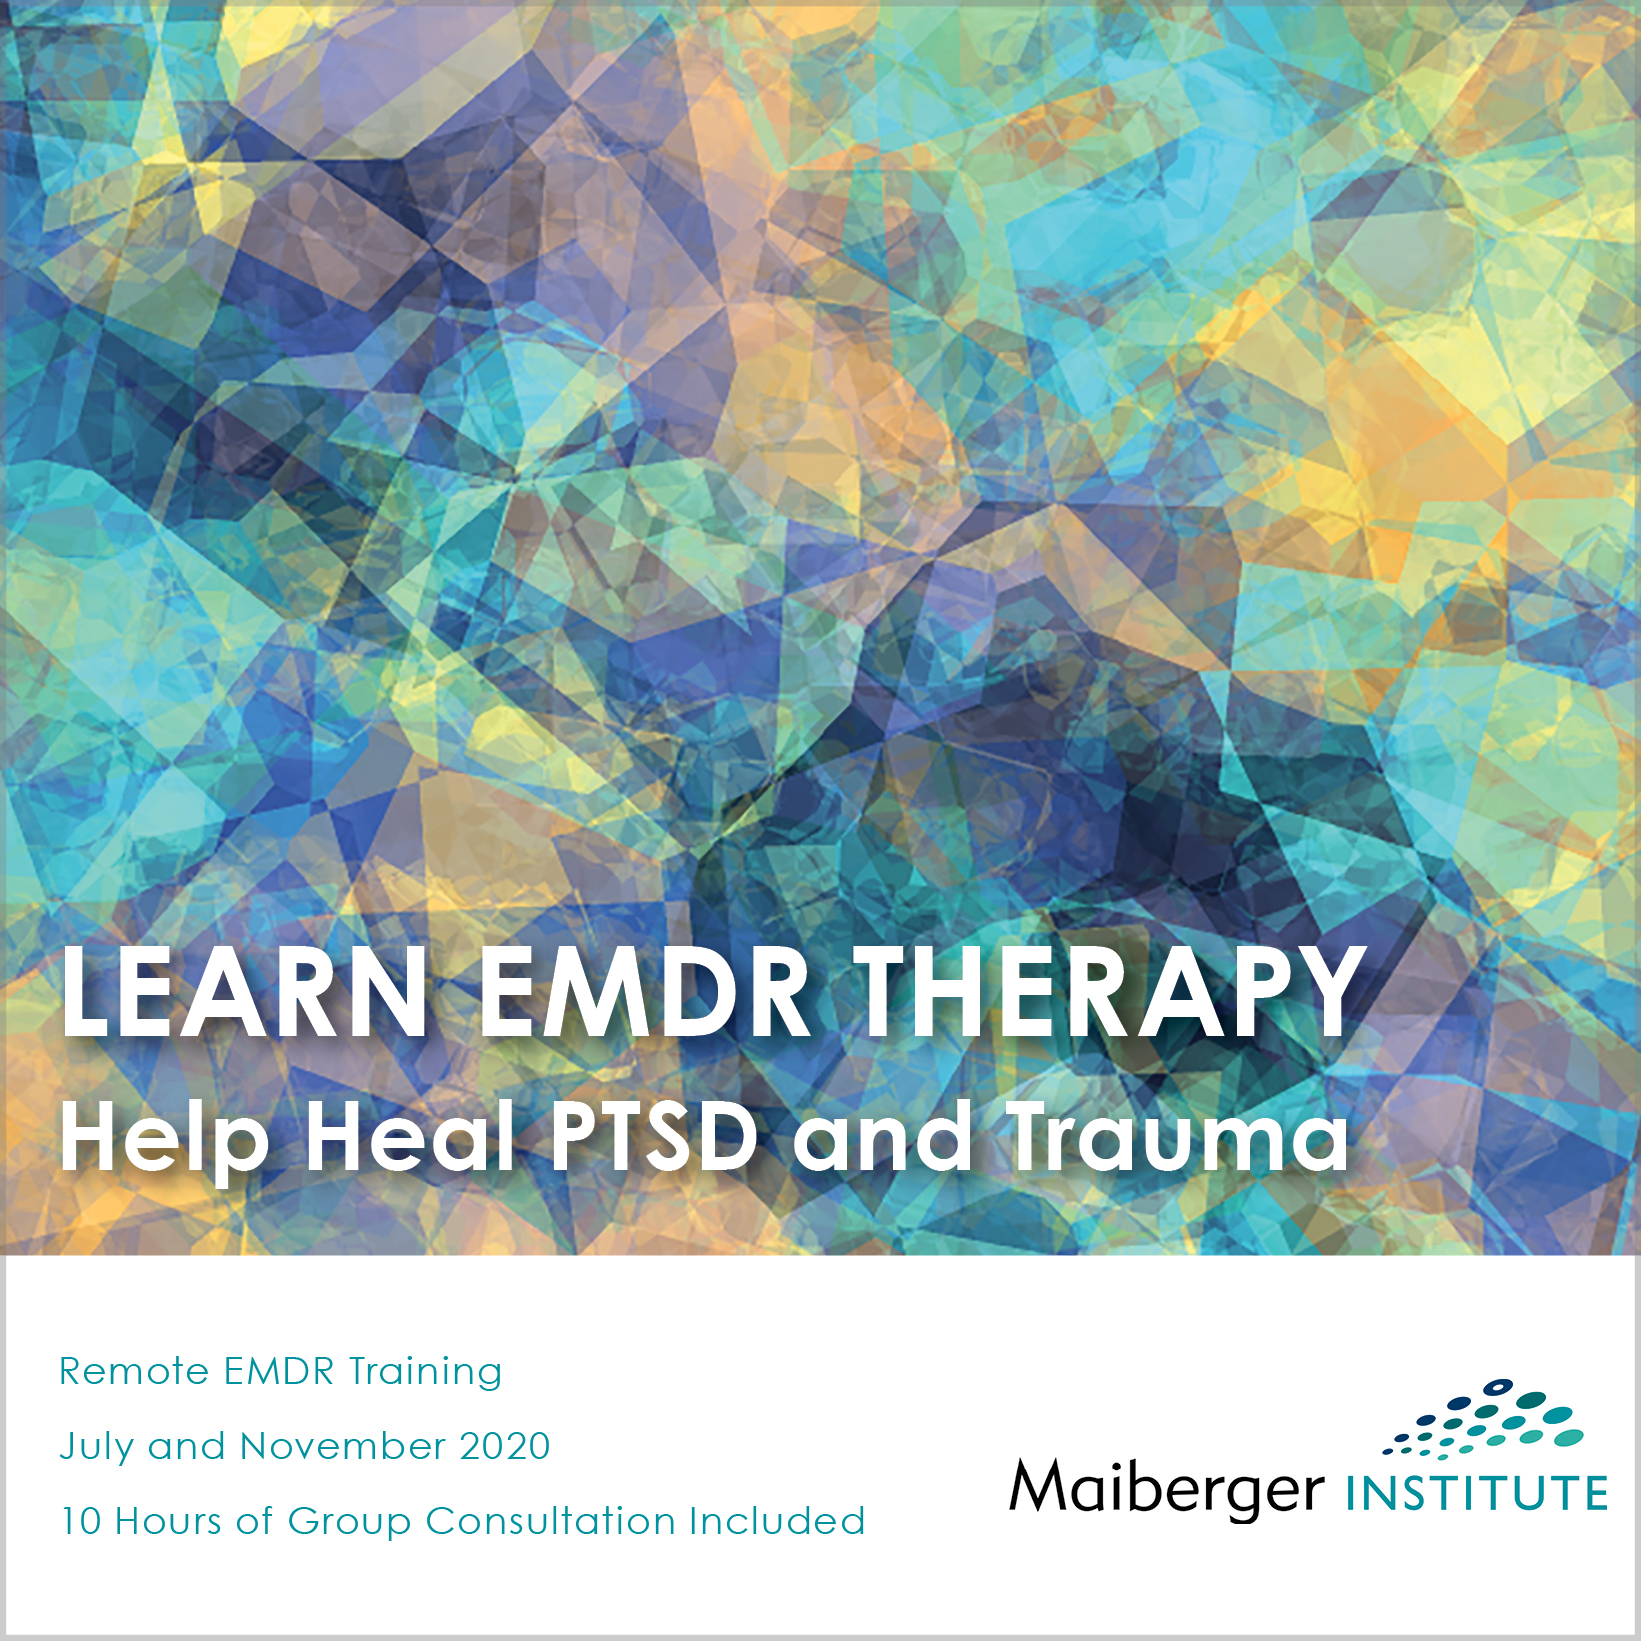 Remote EMDR Training July and November 2020 Maiberger Institute